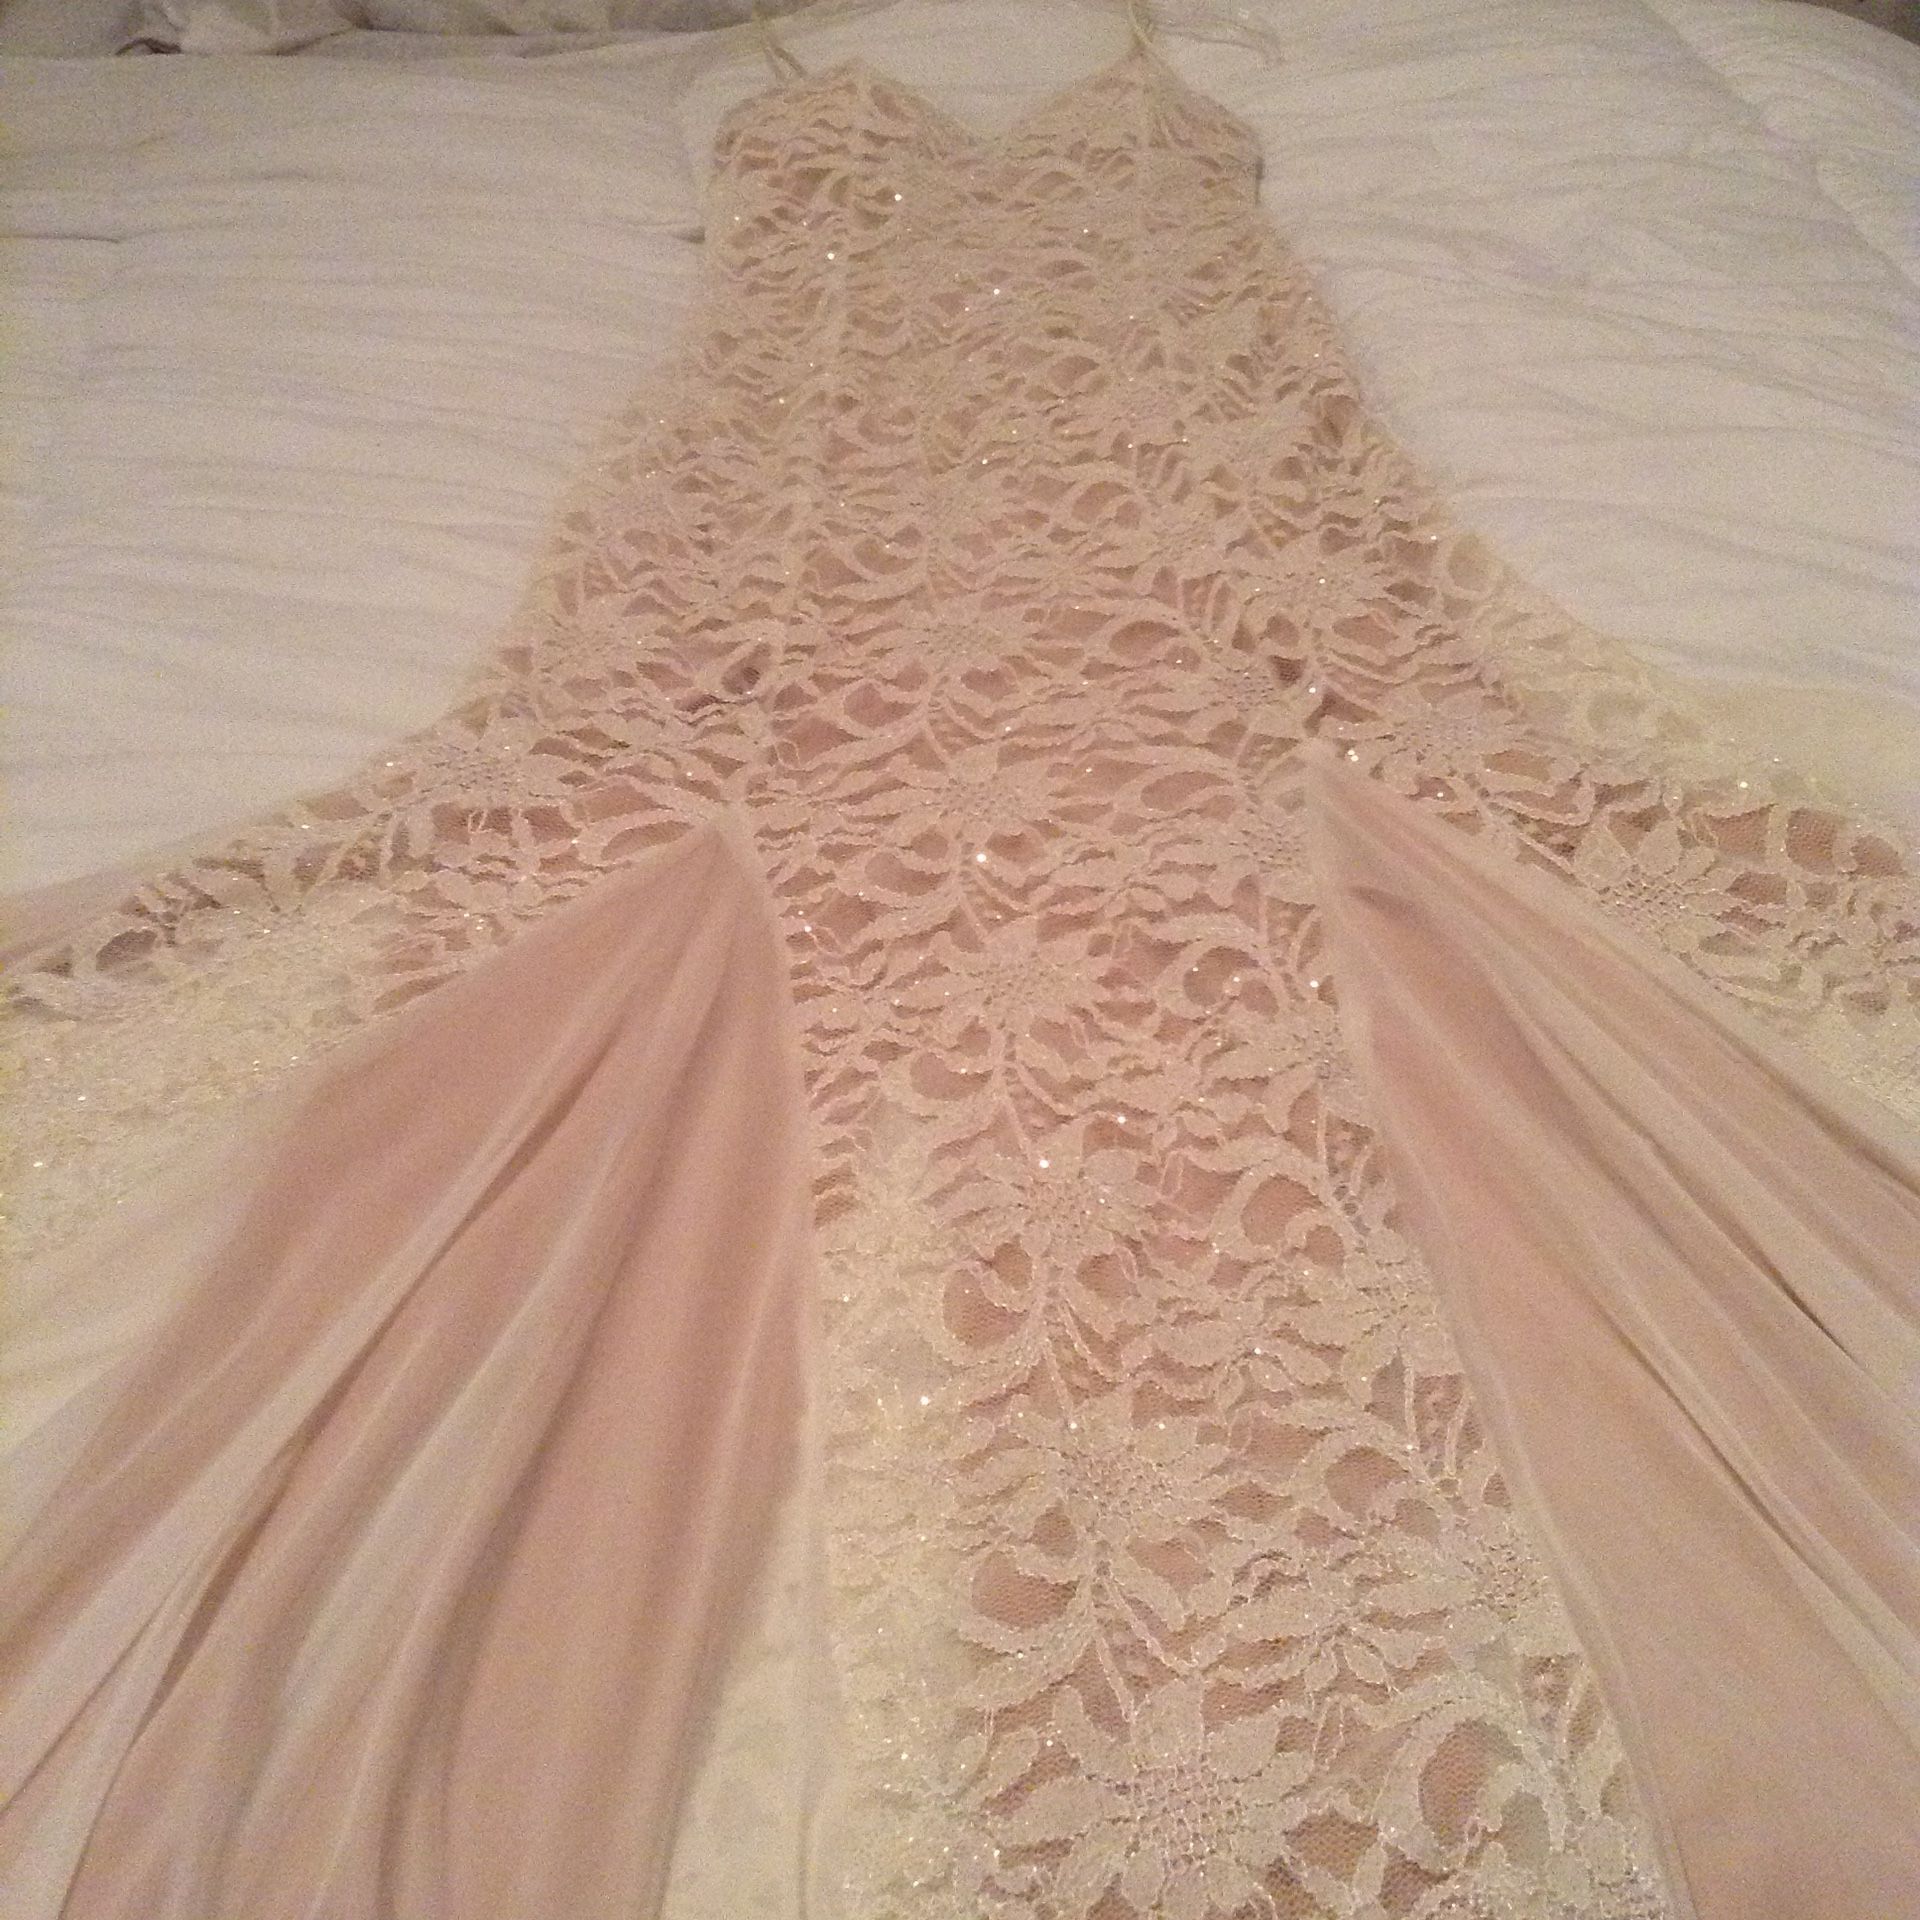 Runway Model Prom Dress on Sale! $225 Dress for $50!!